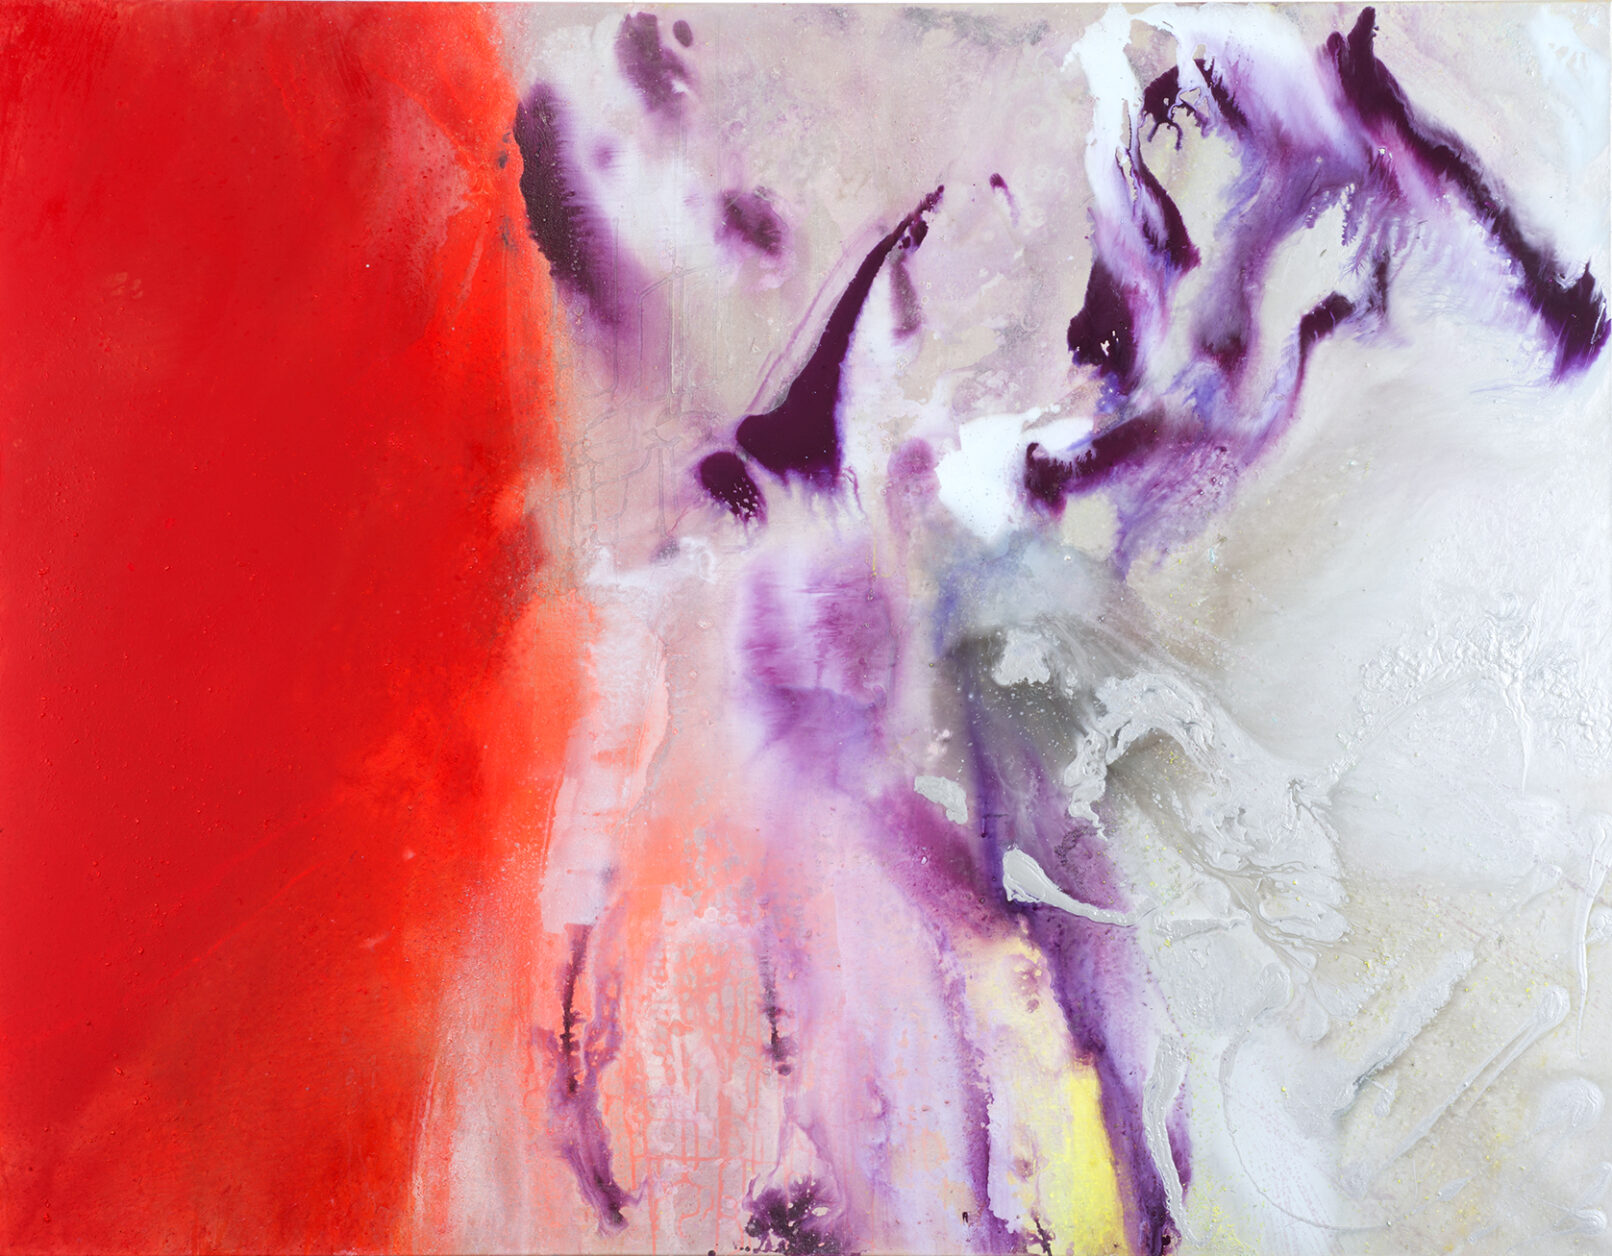 2021-01-01, Veil, Pigment, Acryl auf Leinwand, 170 x 220 cm